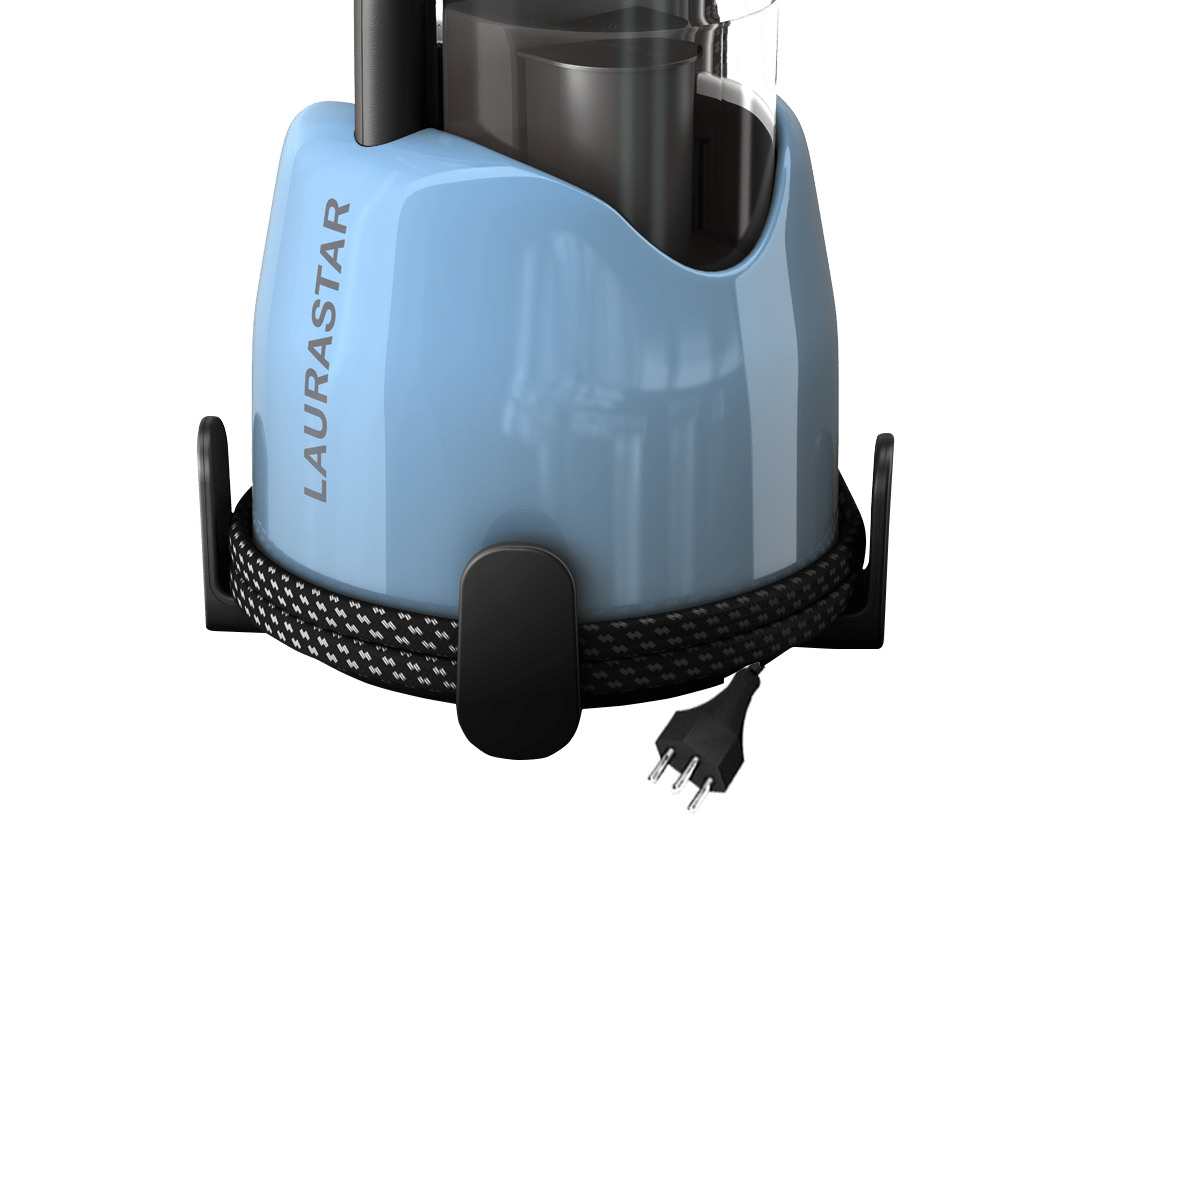 Laurastar Lift Plus Blue Sky - Steam generator